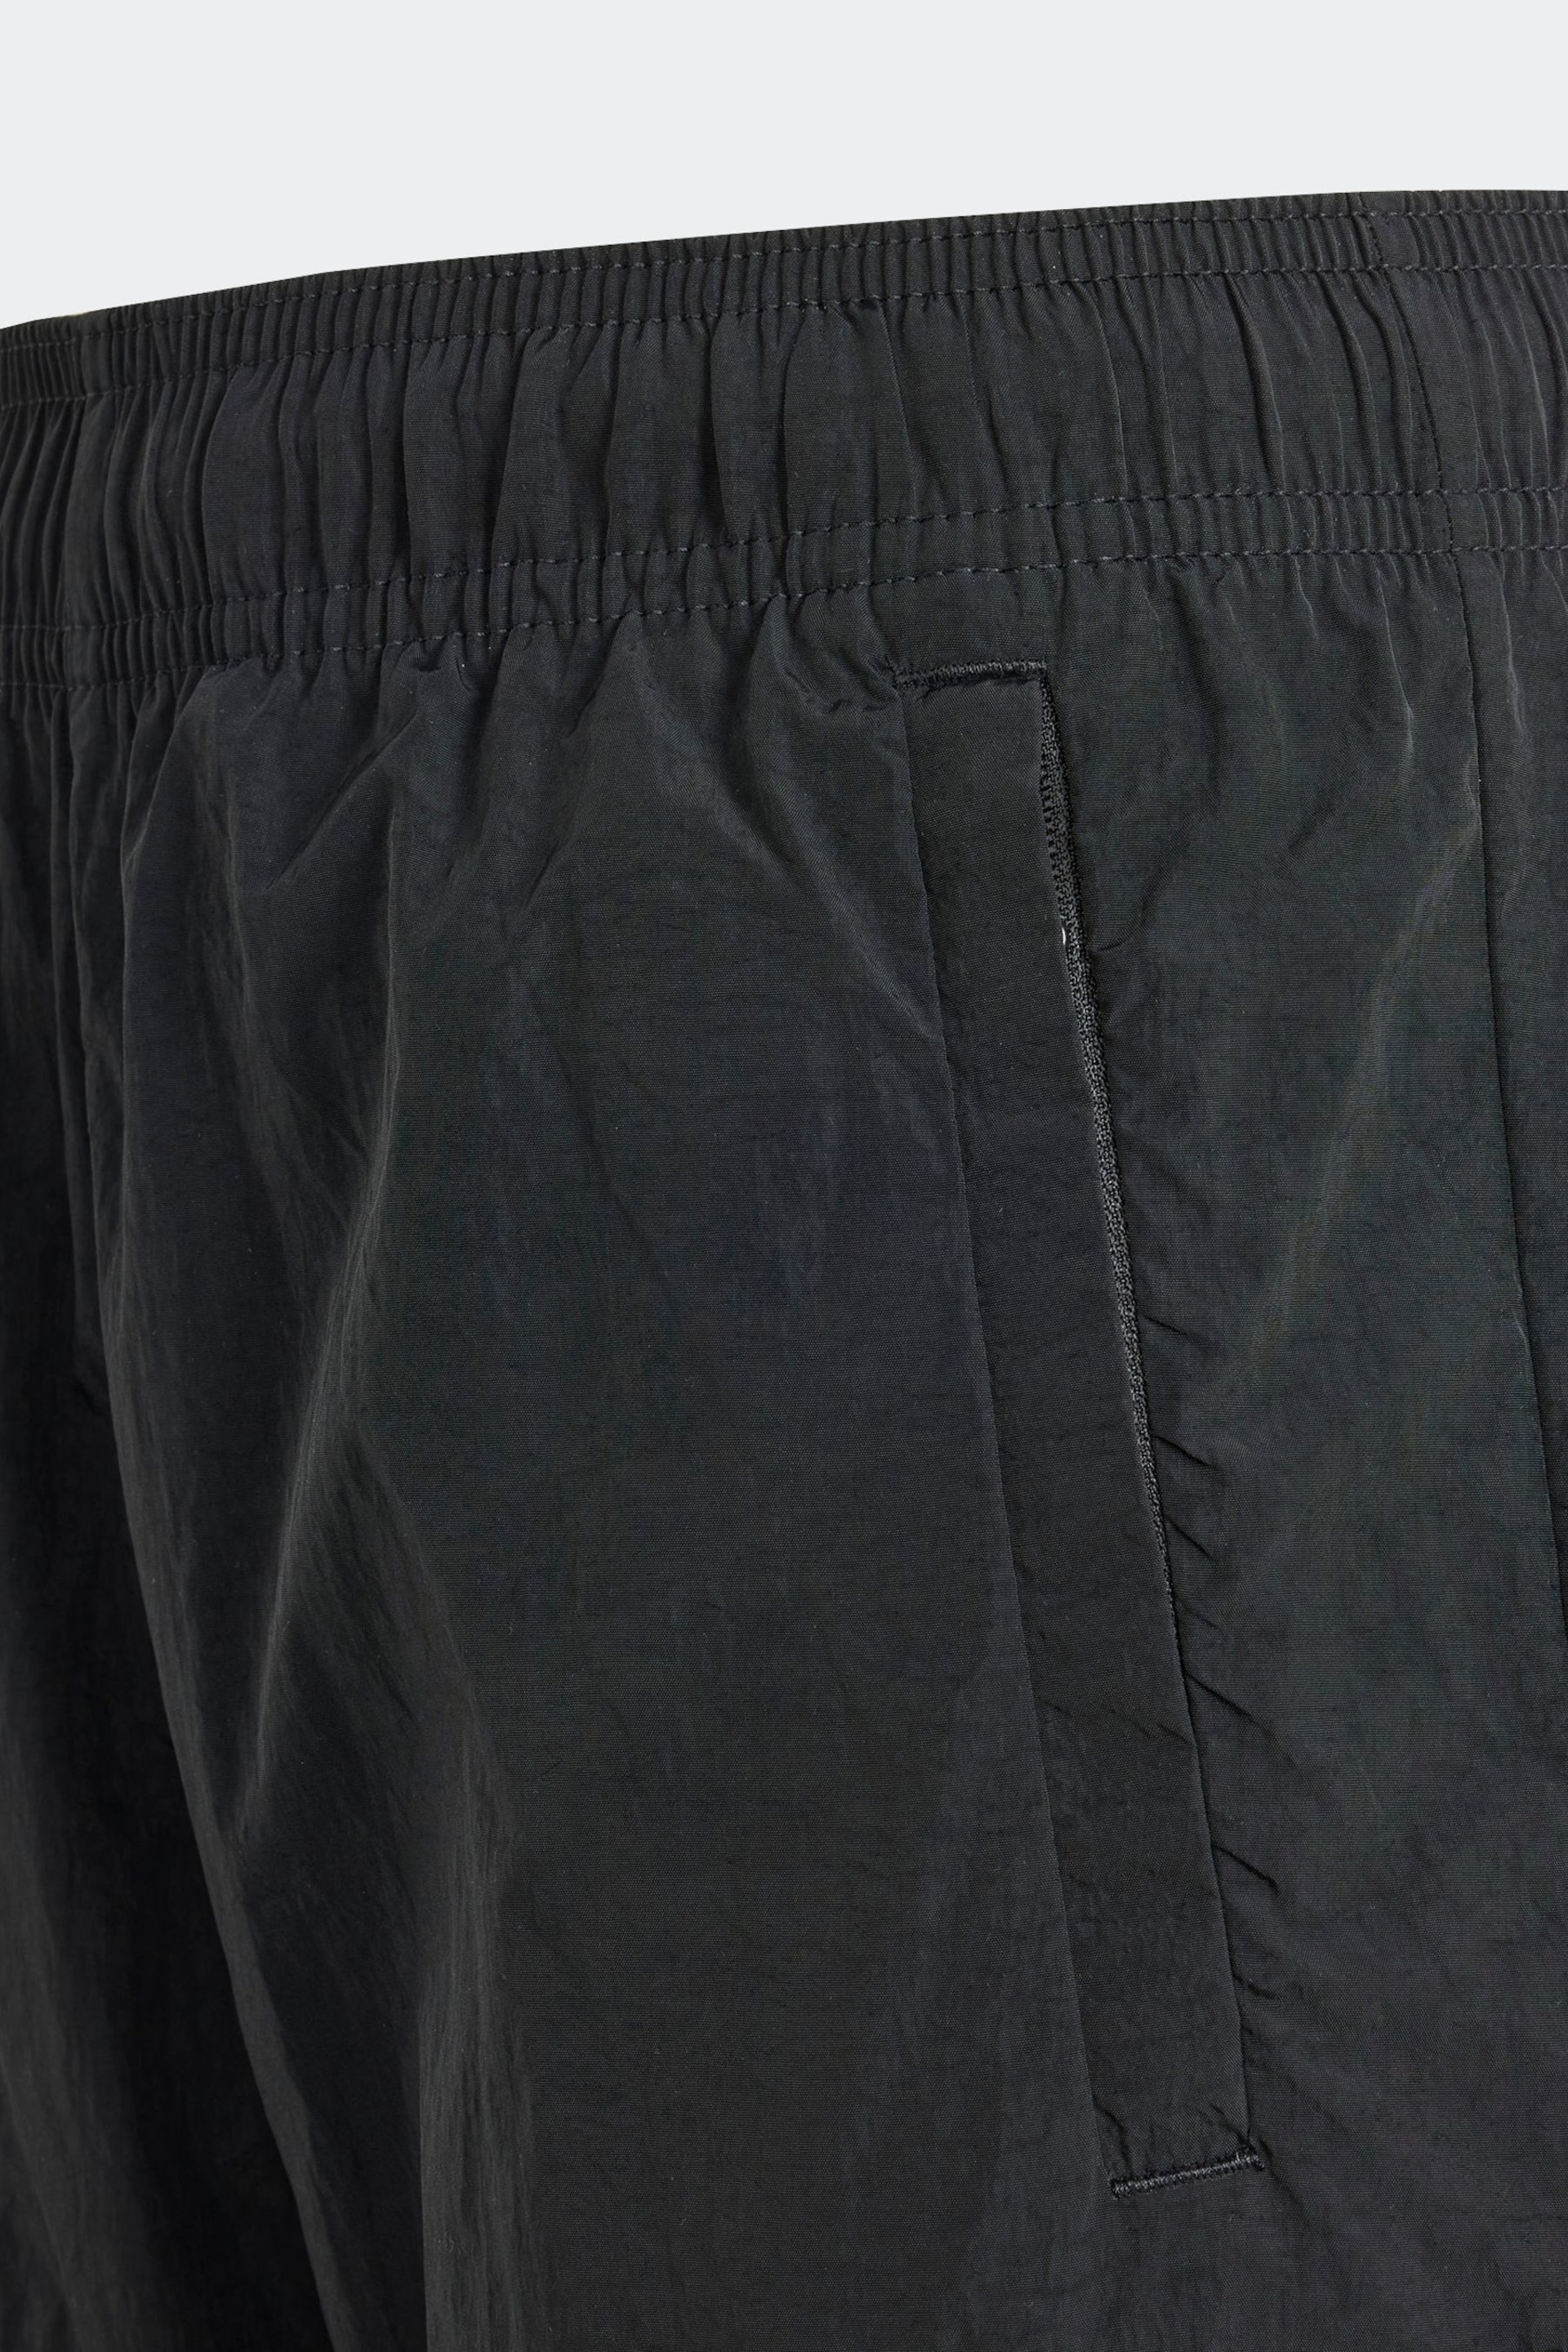 adidas Black Originals Cargo Shorts - Image 4 of 5